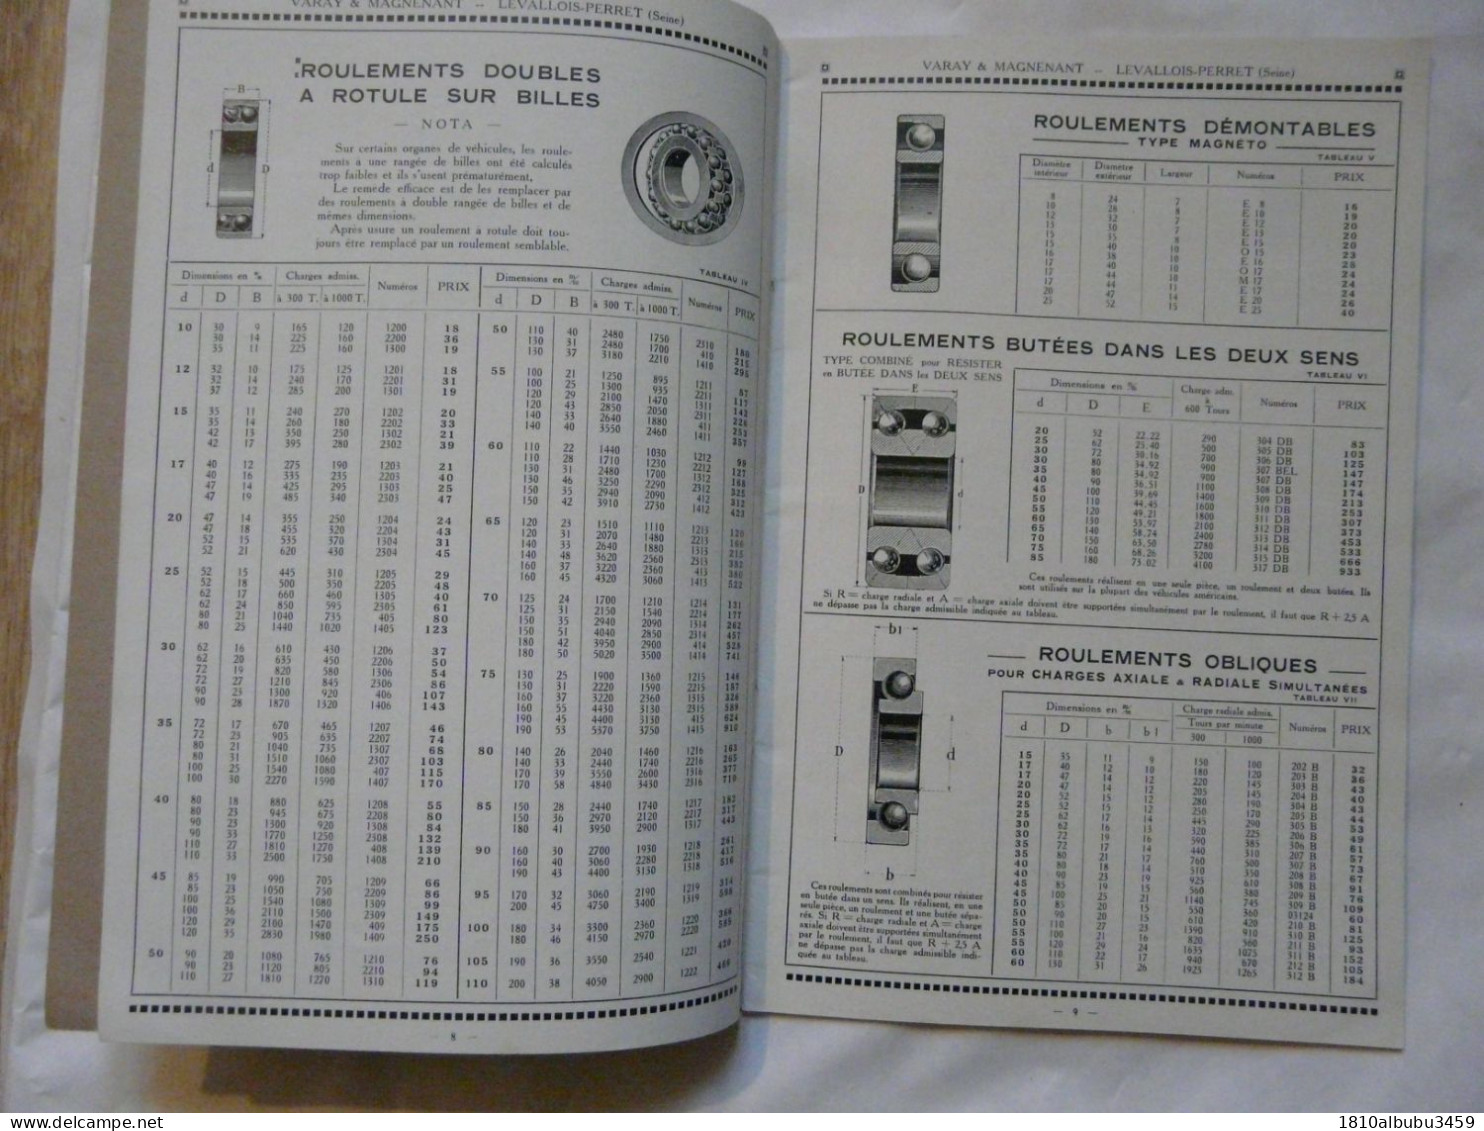 CATALOGUE - SPECIALITES MECANIQUE DE PRECISION : CV - Janvier 1931 - Do-it-yourself / Technical